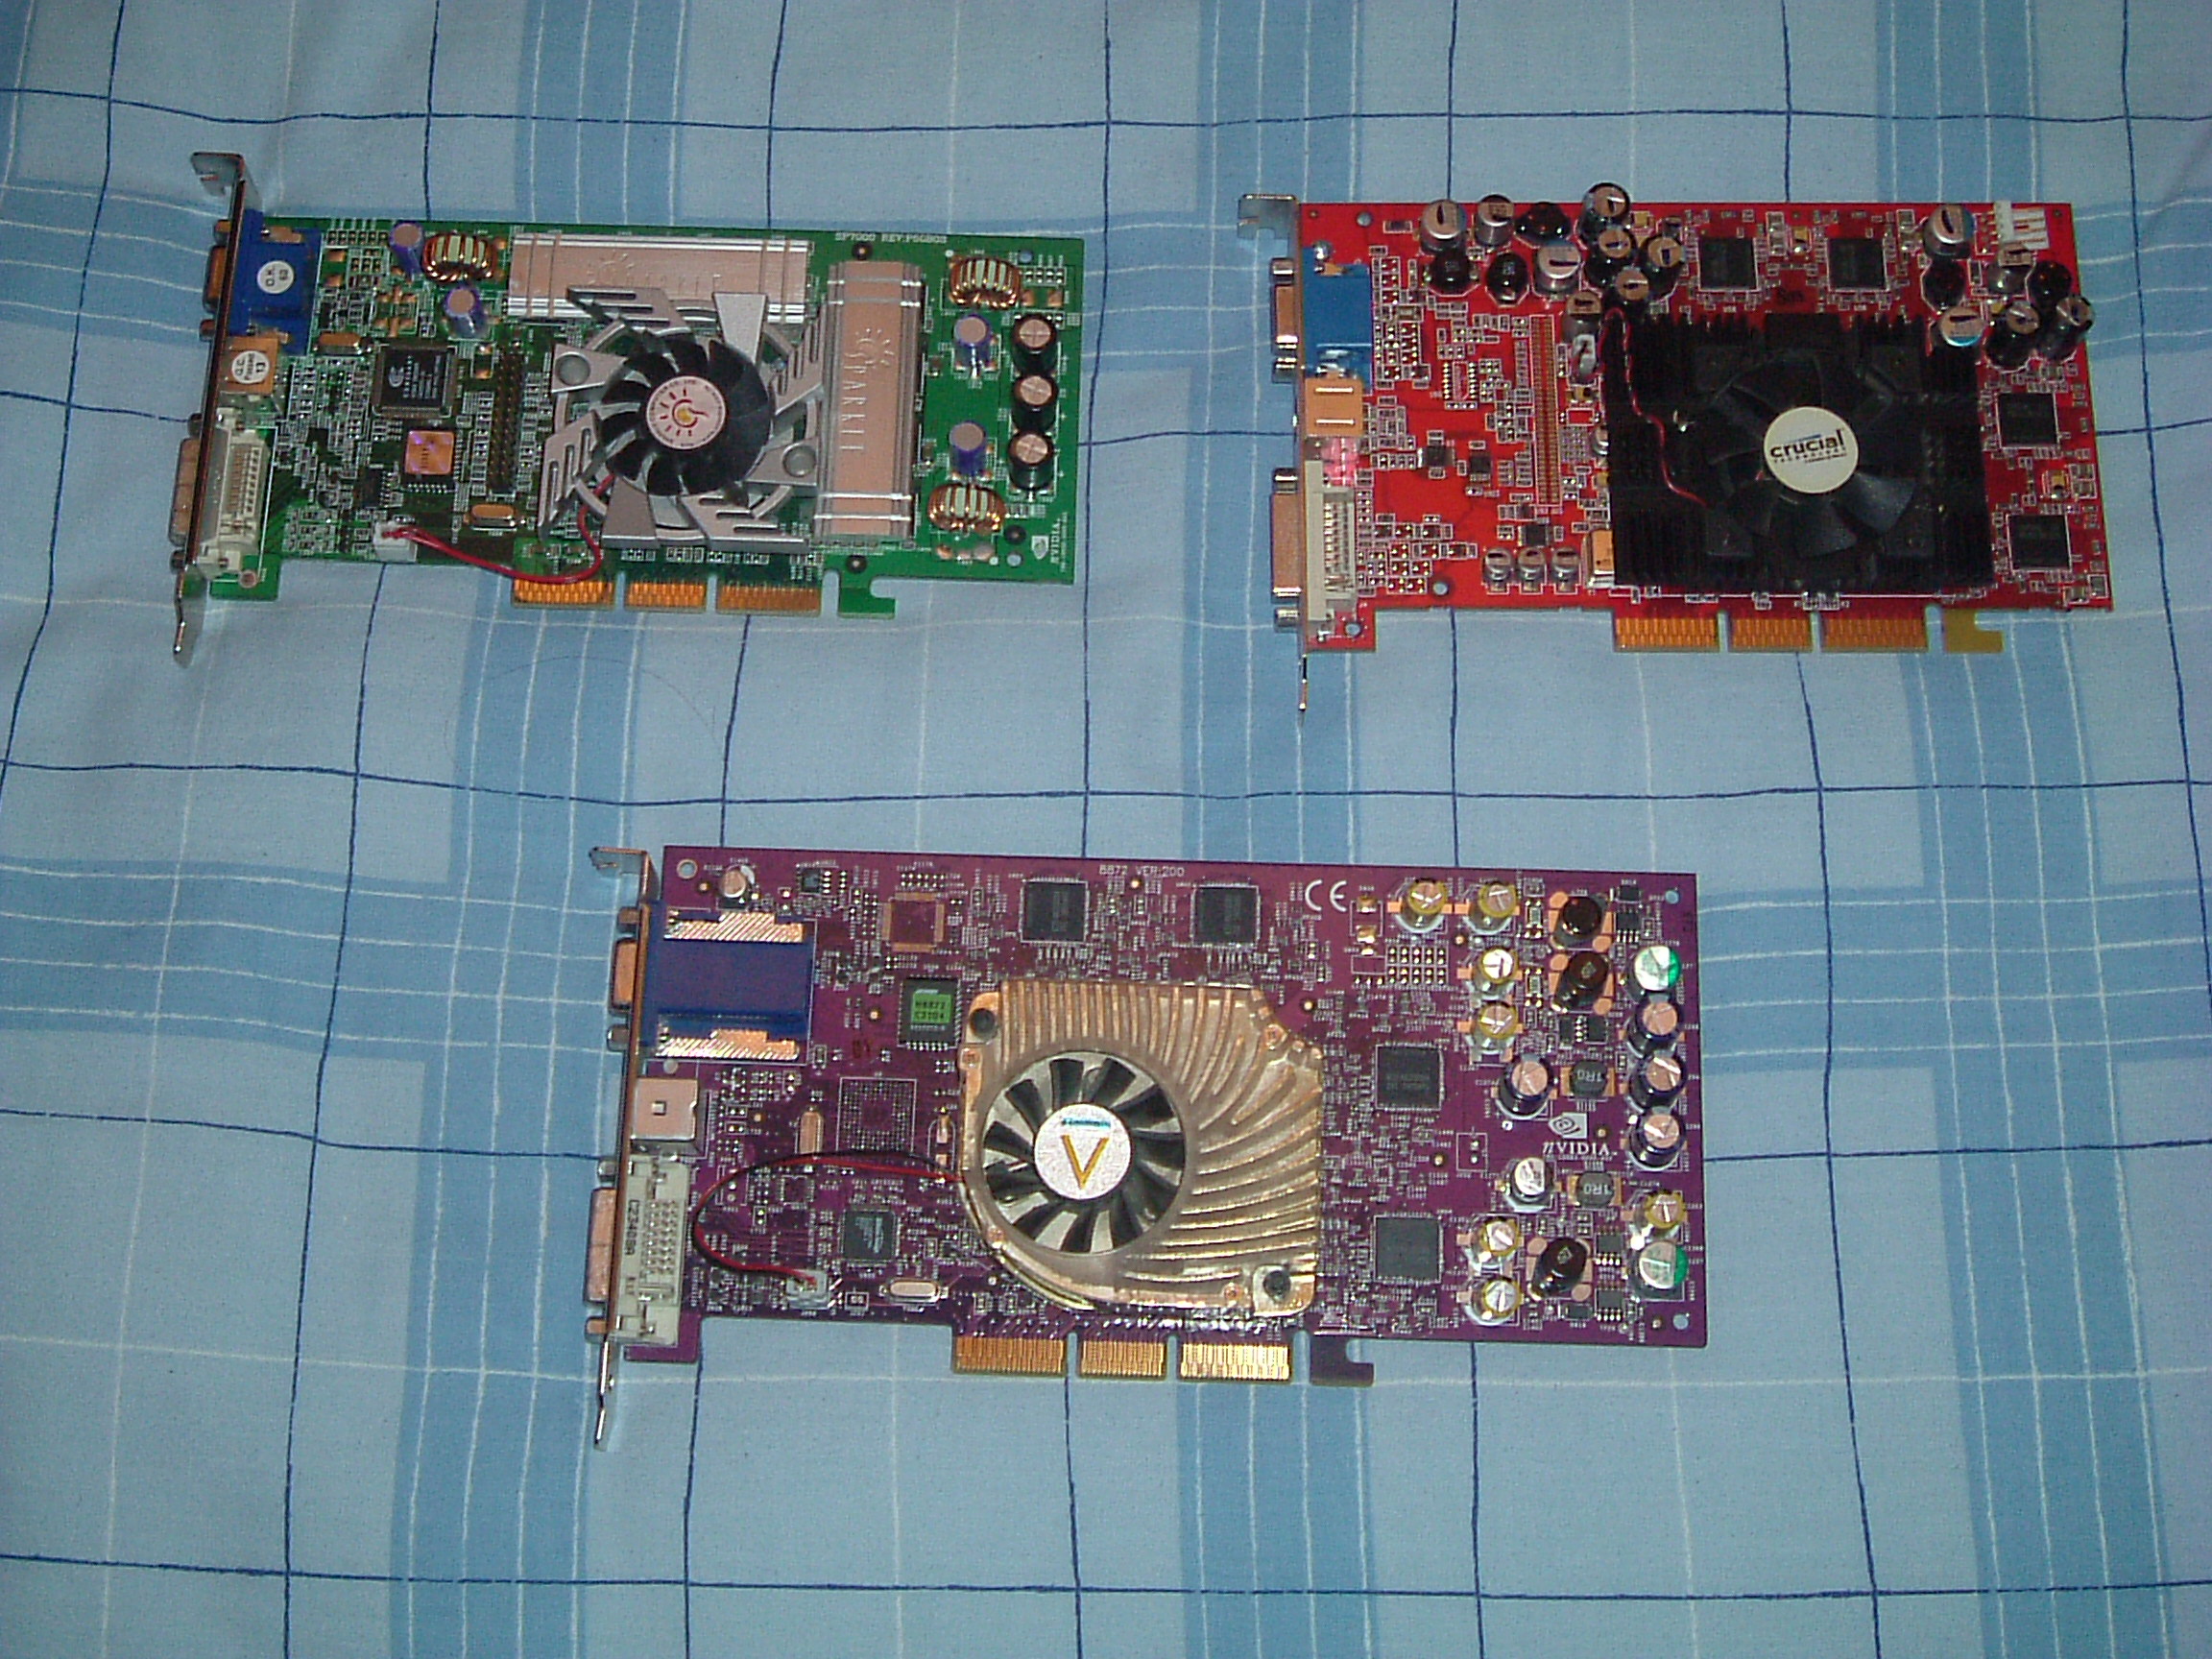 Geforce 3, ATI 9700 Pro and a Geforce 4.JPG